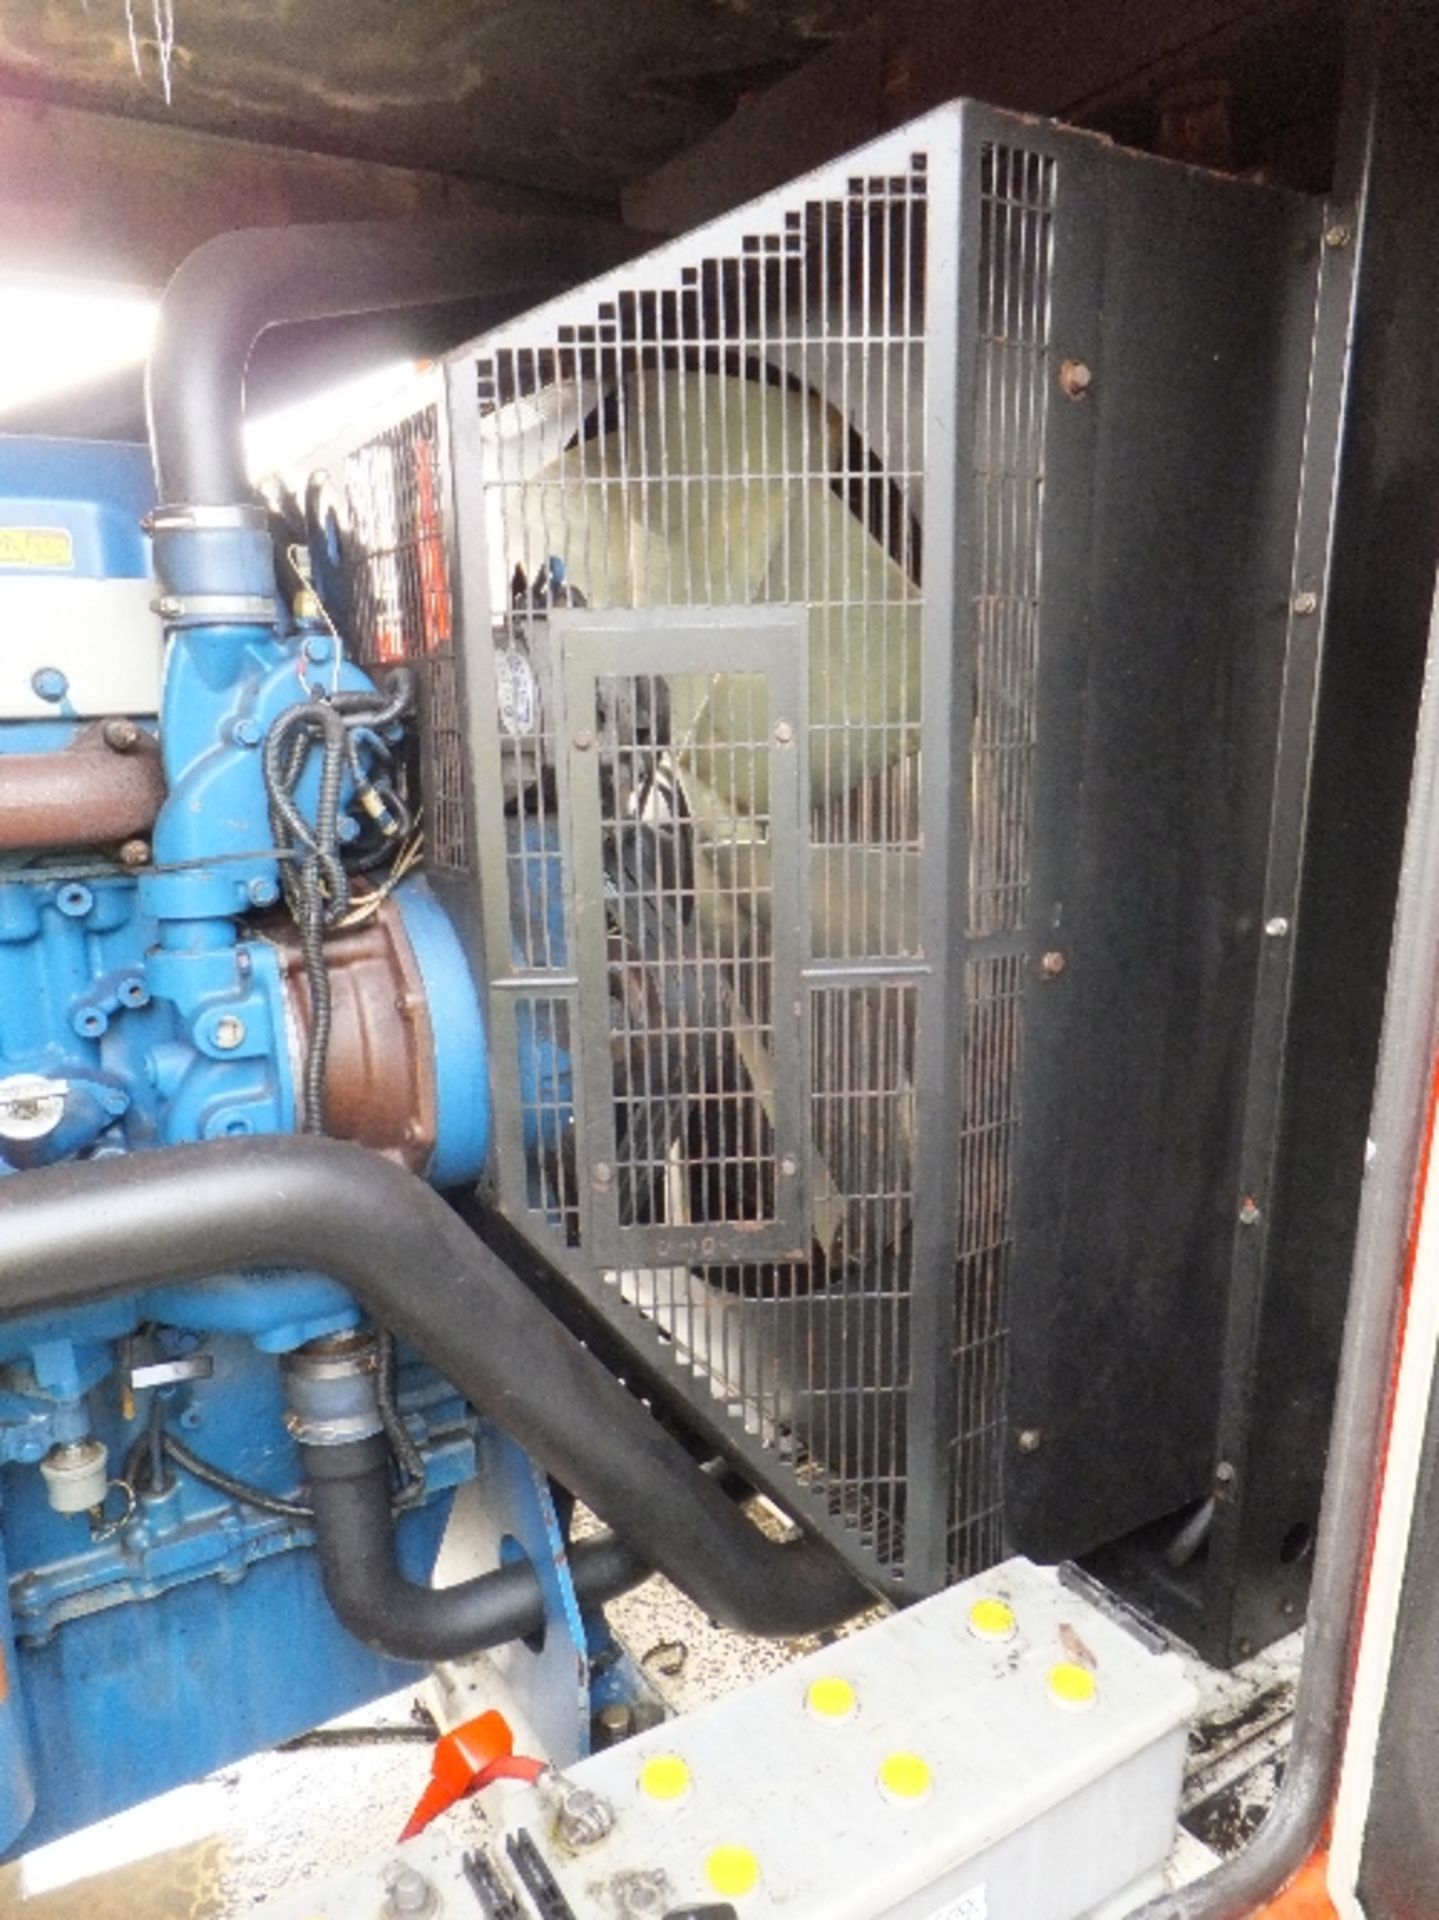 FG Wilson 500kva generator (2007) Fuel line removed, no cover on alternator - Image 7 of 8